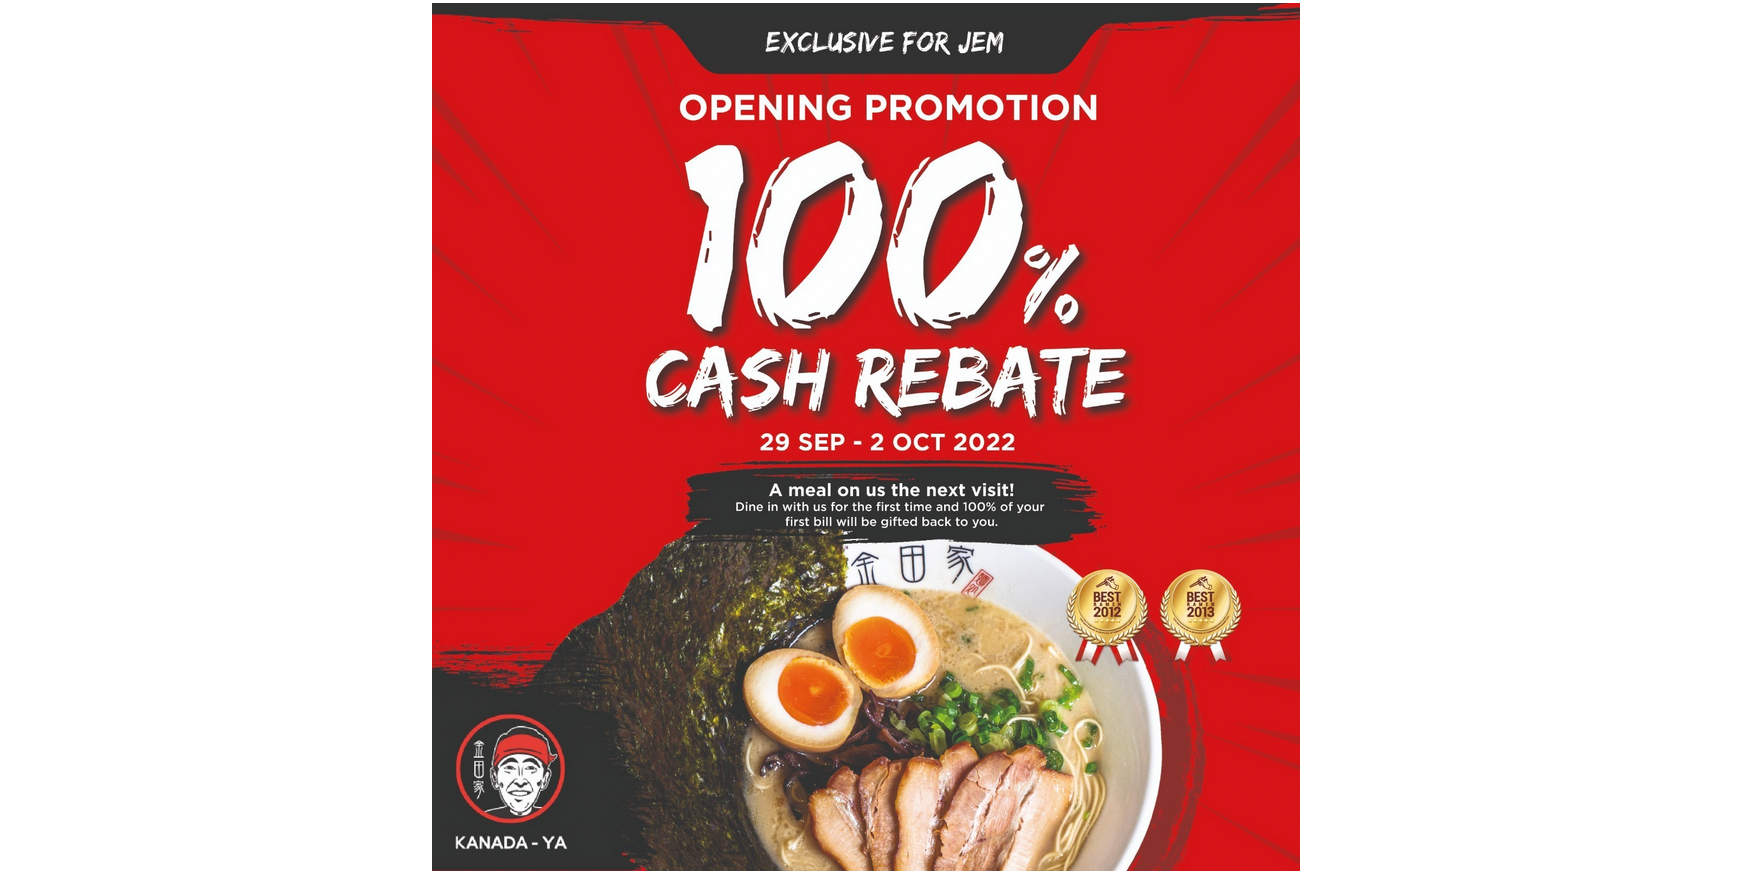 Enjoy 100% cash rebate at Kanada-Ya JEM from 29 September to 2 October!